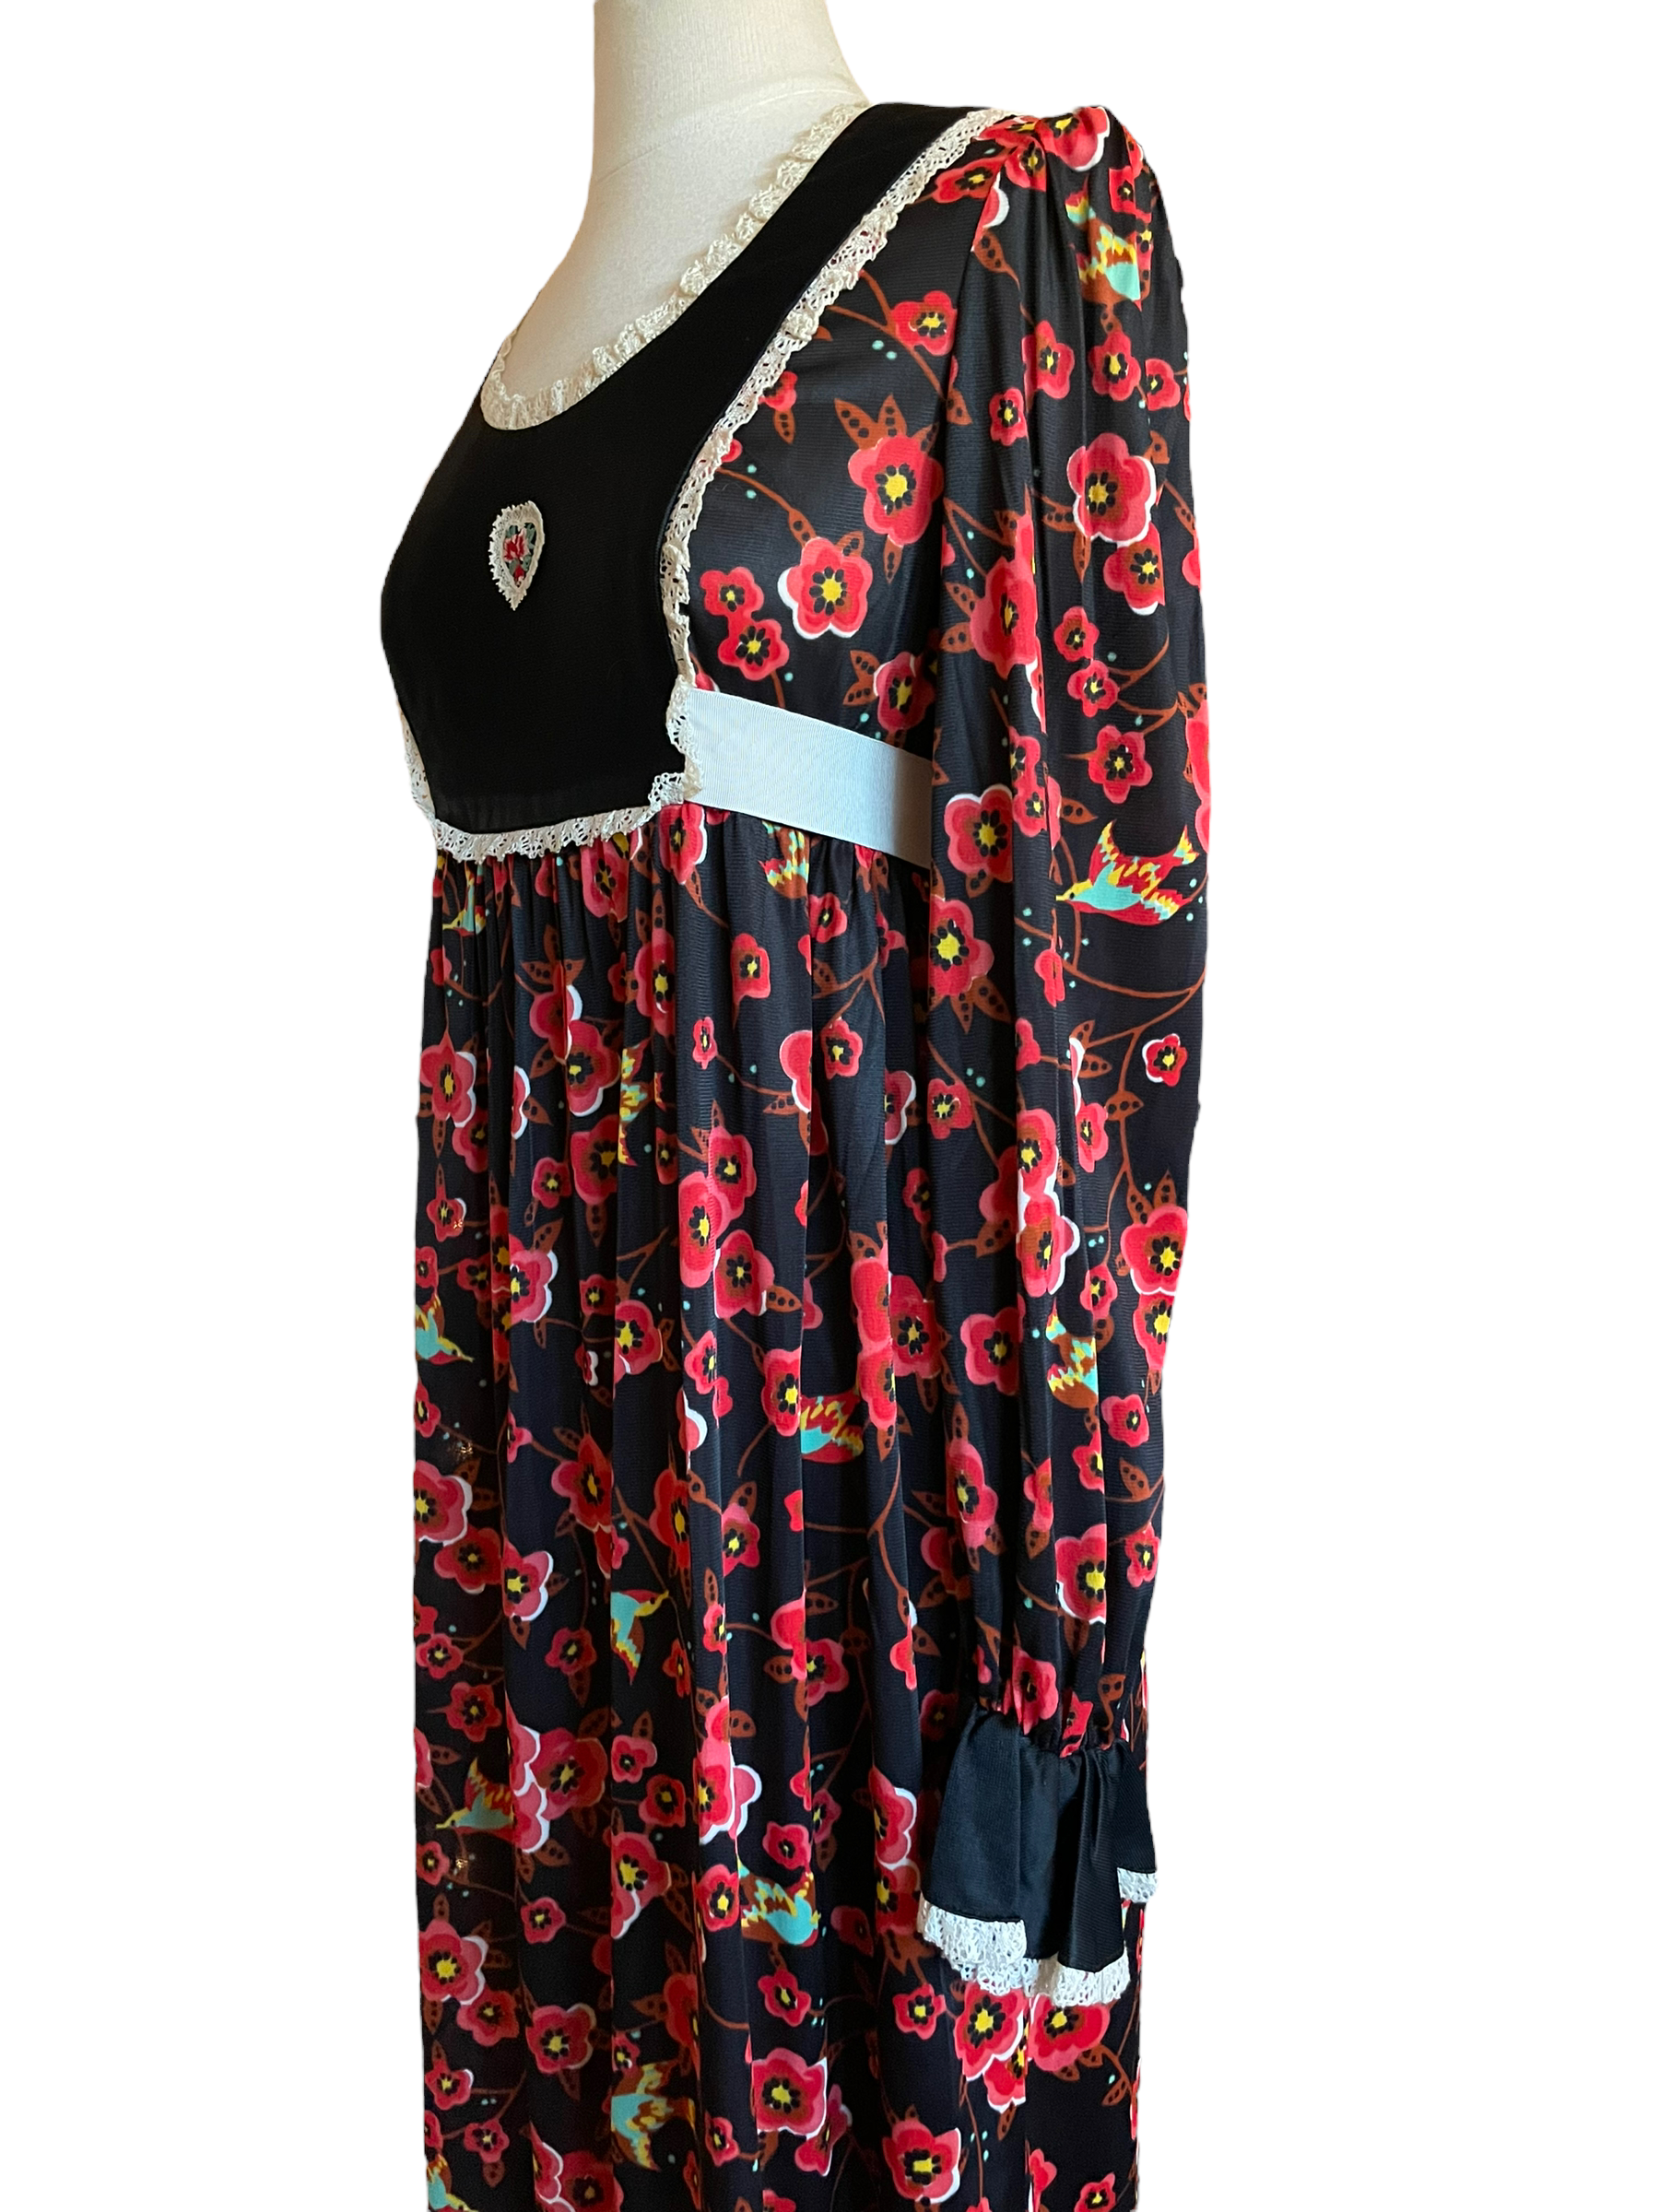 Vintage 1960s Cherry Blossom Maxi Dress SZ S-M |  Barn Owl Vintage | Seattle Vintage Dresses Left side view.